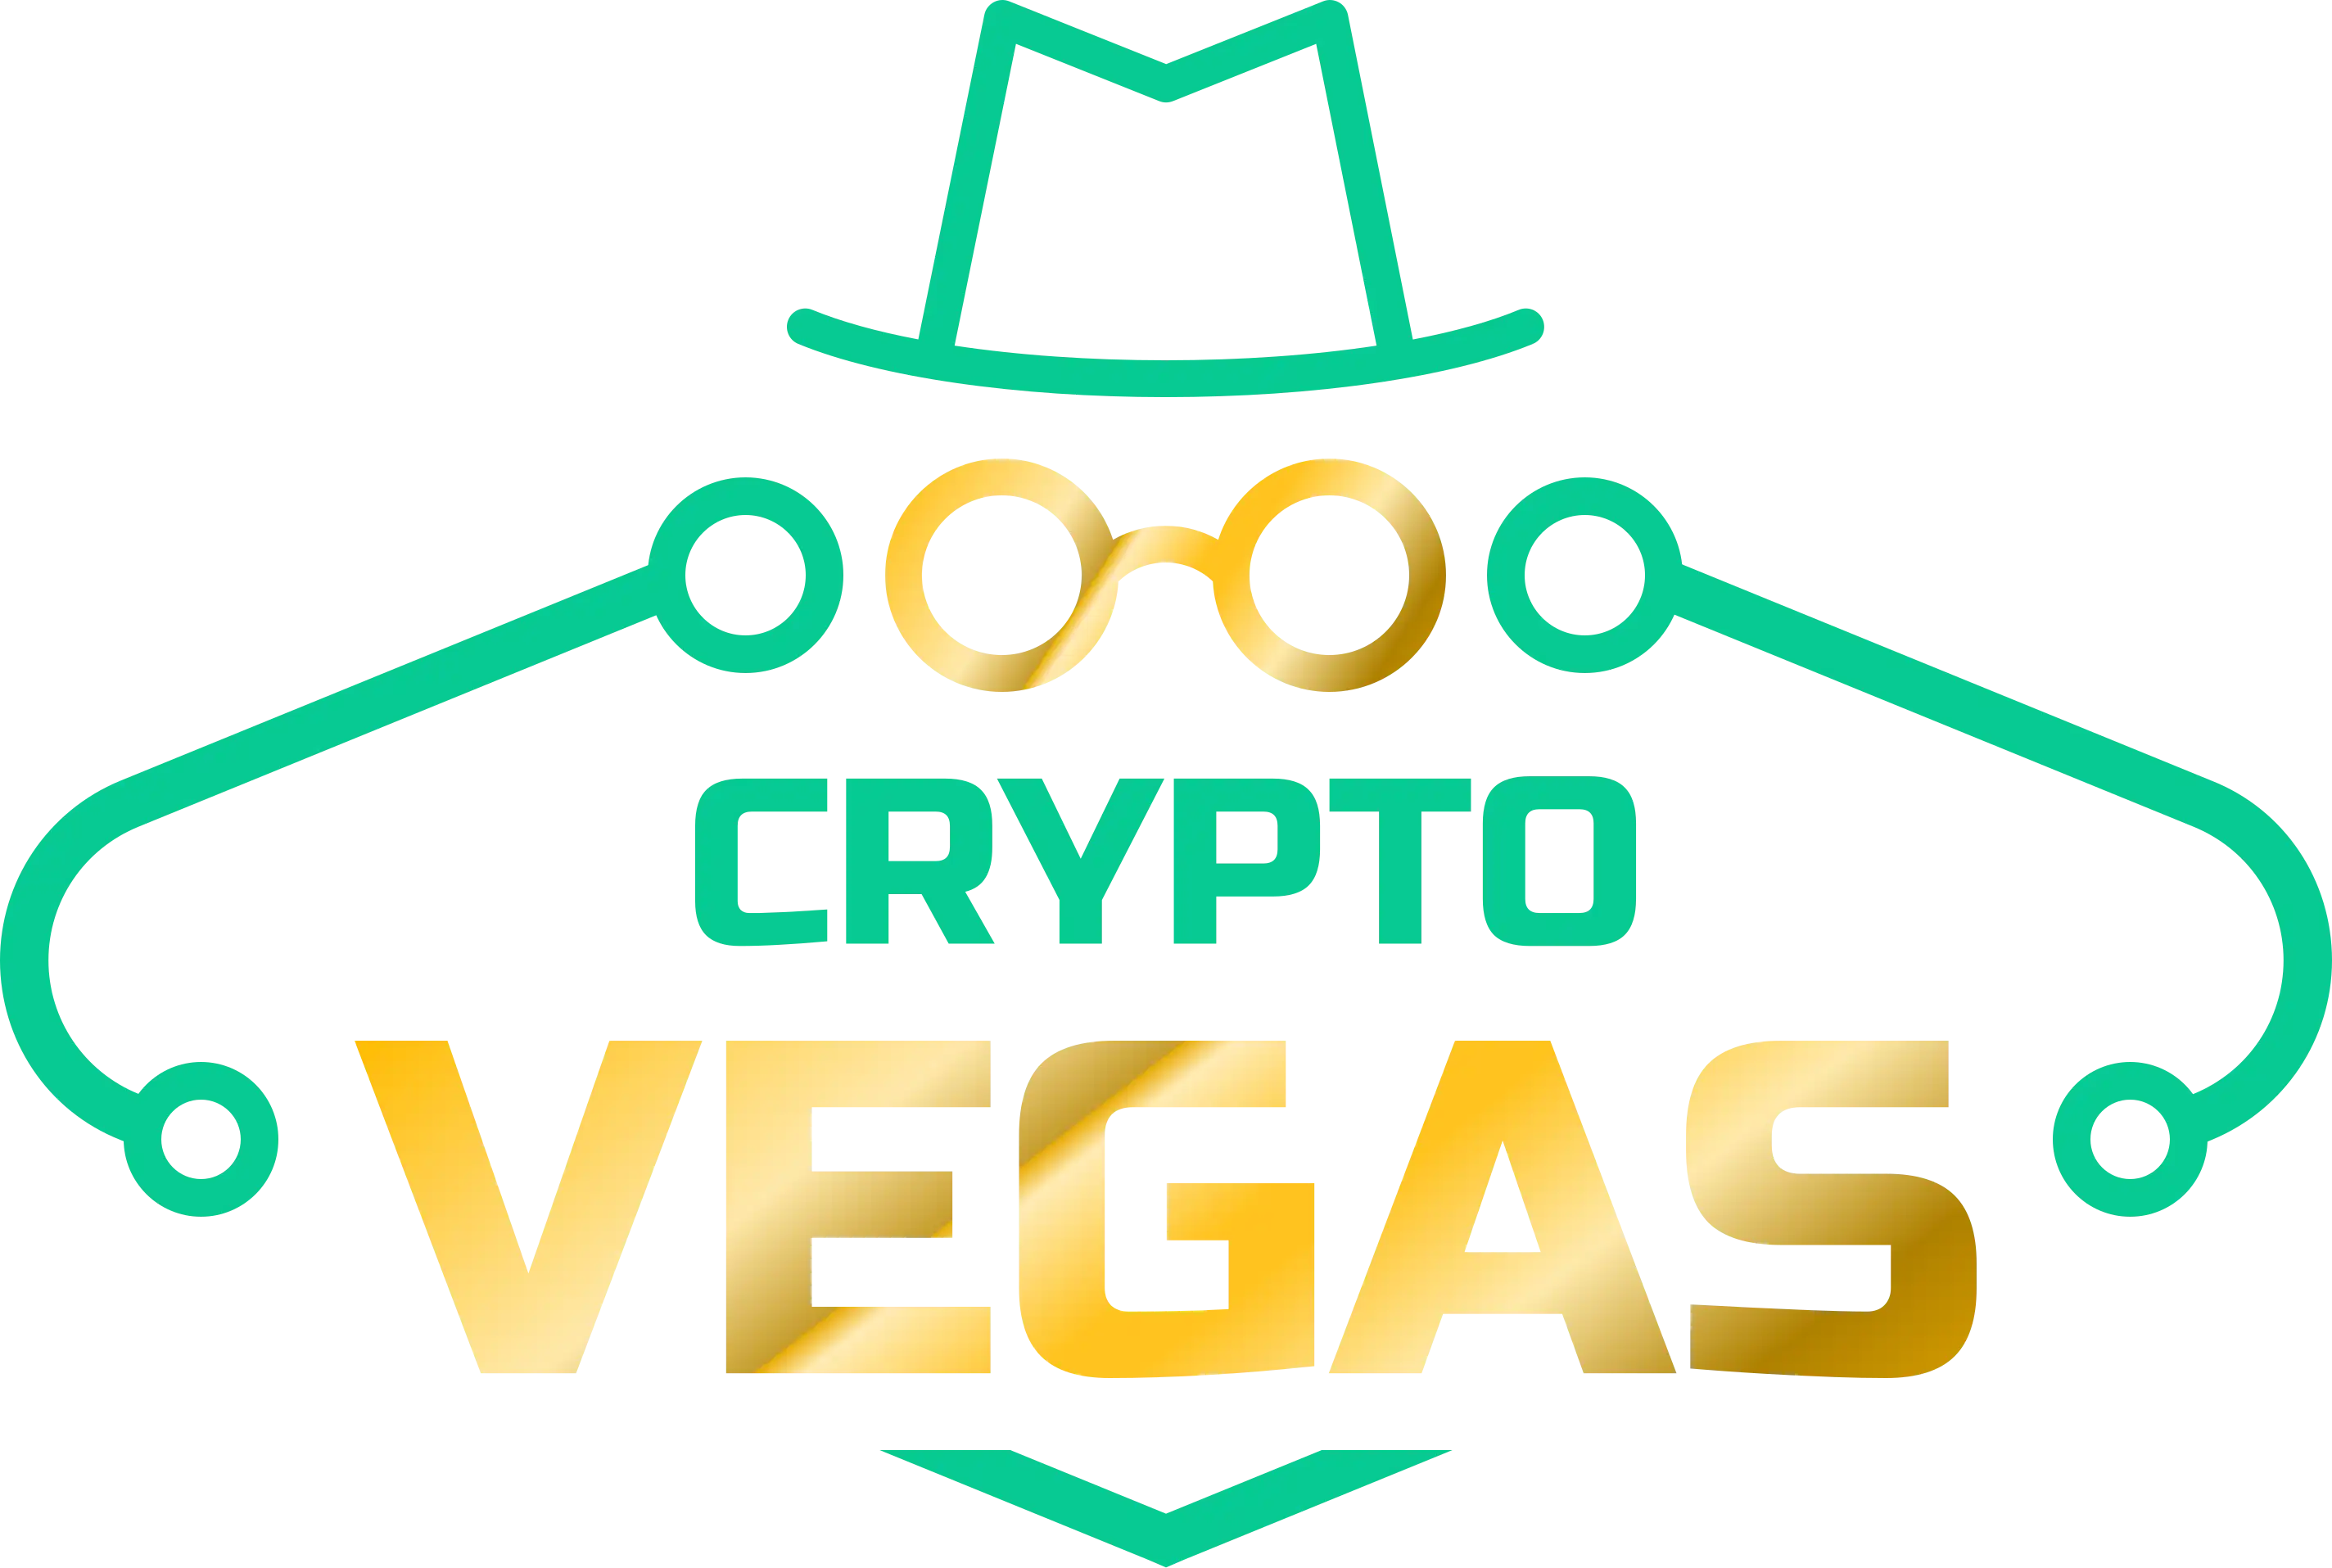 CryptoVegas Casino gives bonus